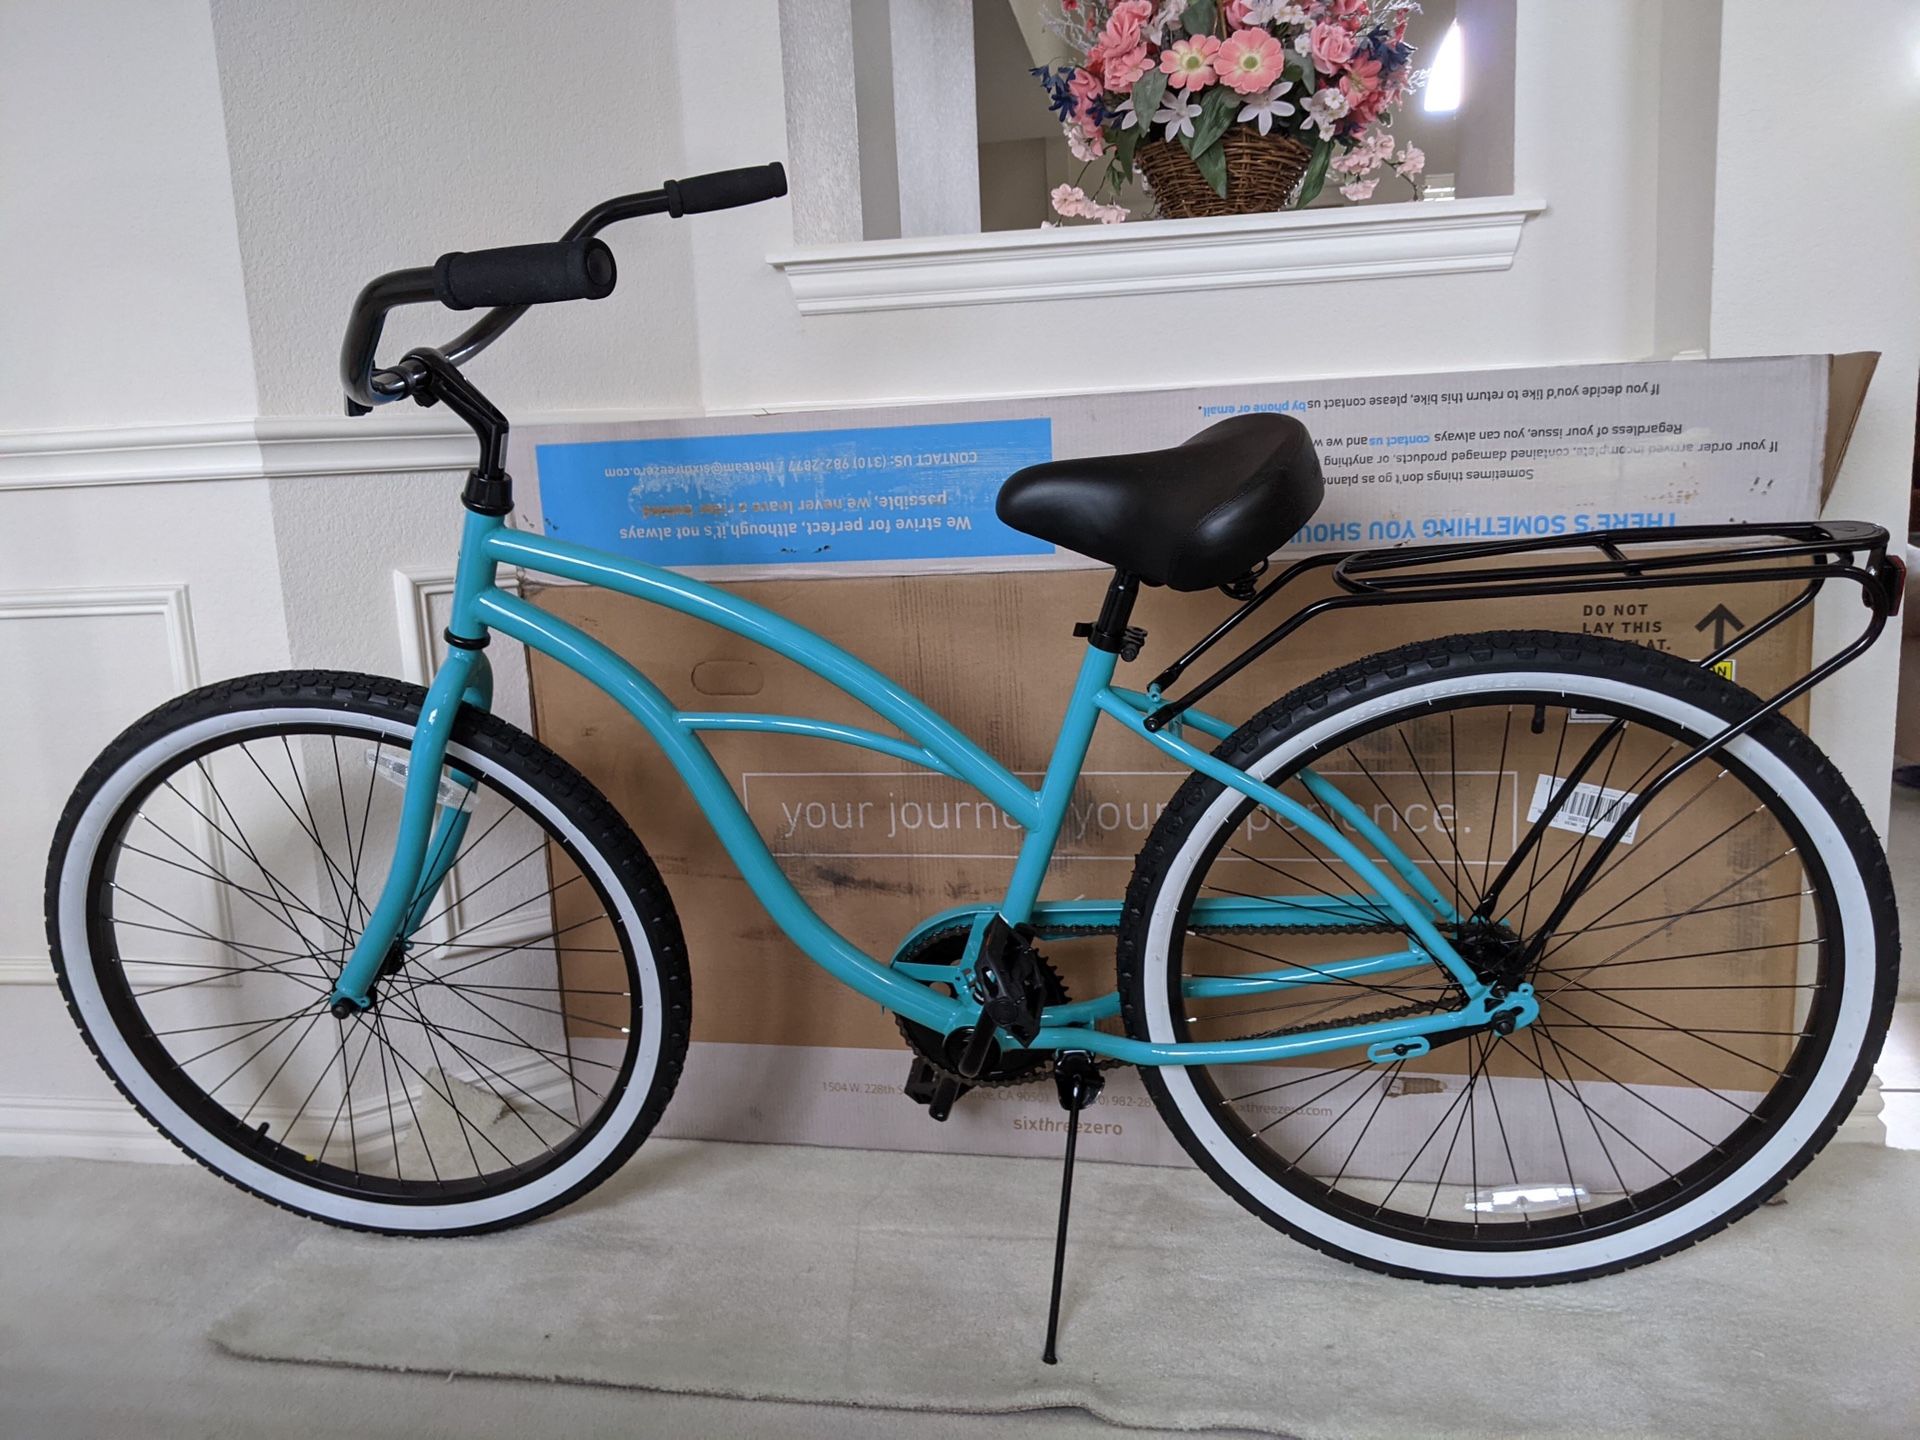 Bicycle: Teal Blue Single Speed Beach Cruiser